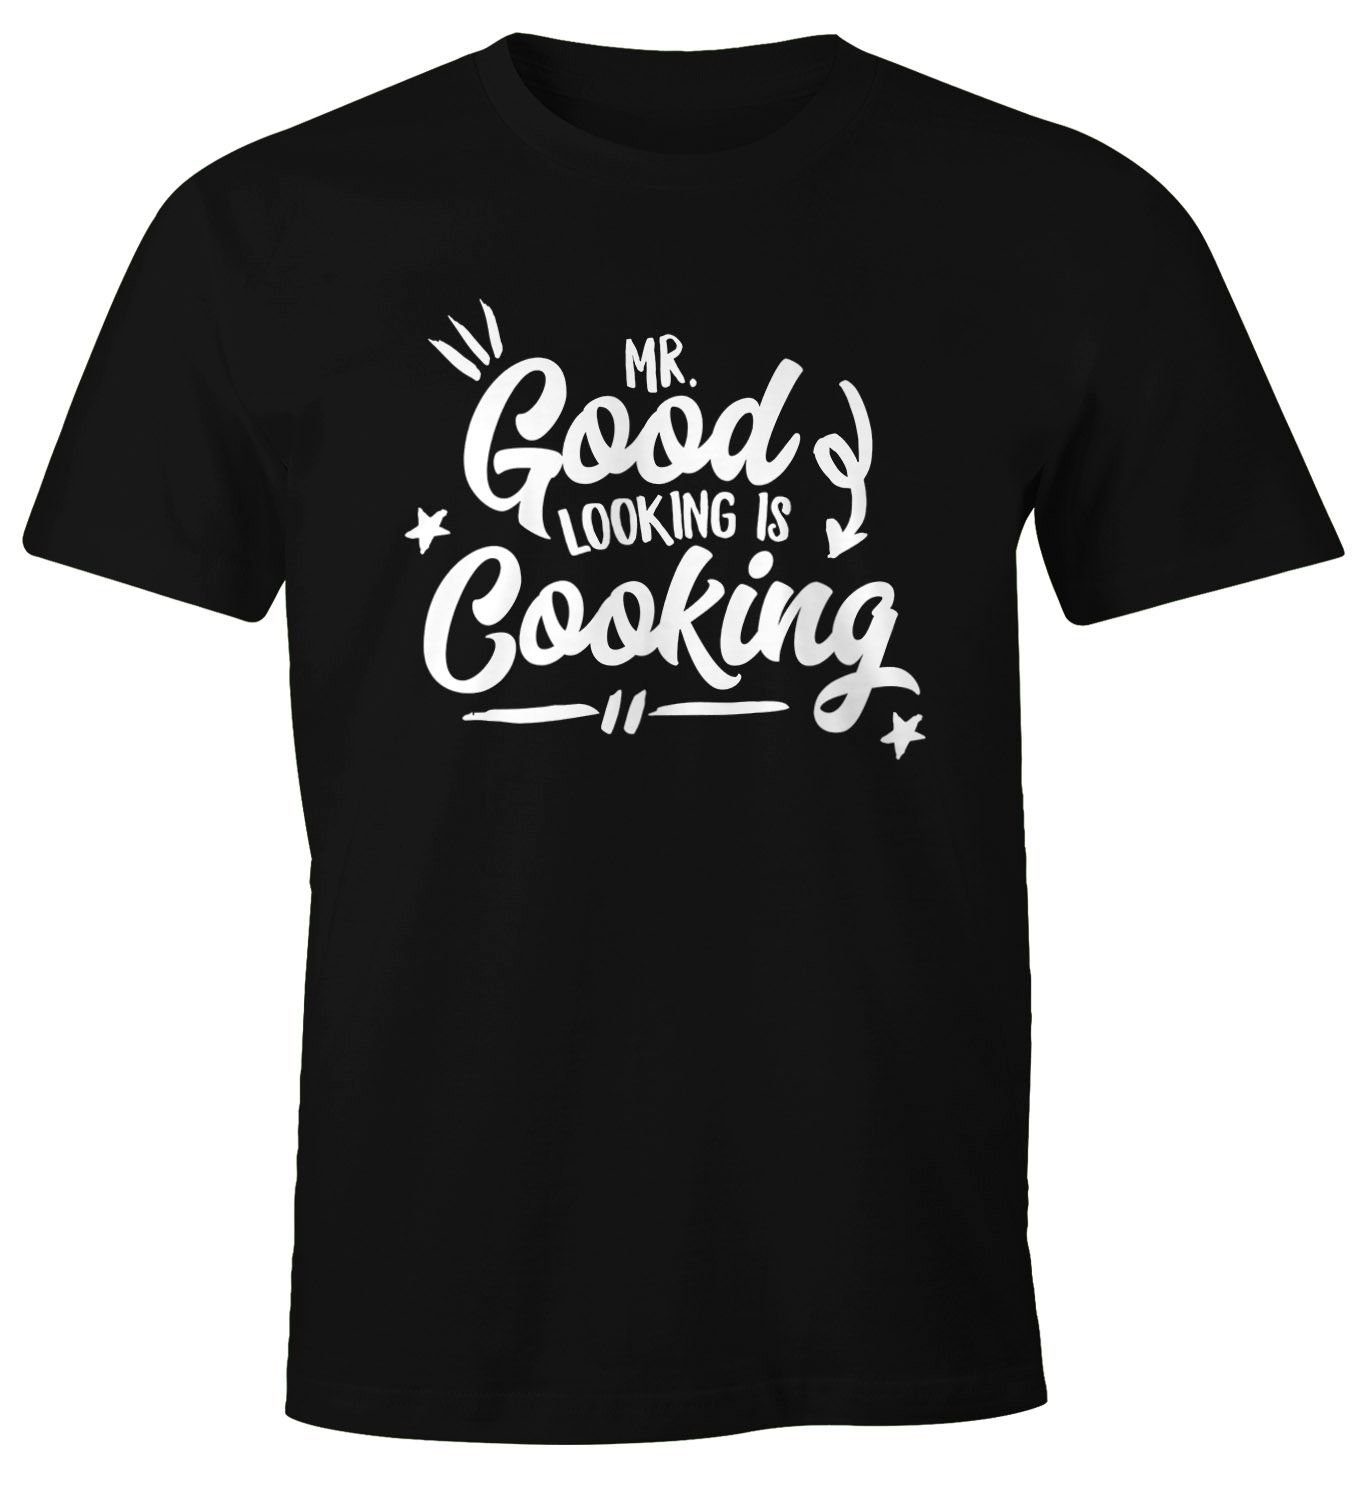 is cooking Koch Print T-Shirt Grillen Herren BBQ Spruch-Shirt Print-Shirt Mr MoonWorks looking Moonworks® Foodie mit good Küche Fun-Shirt